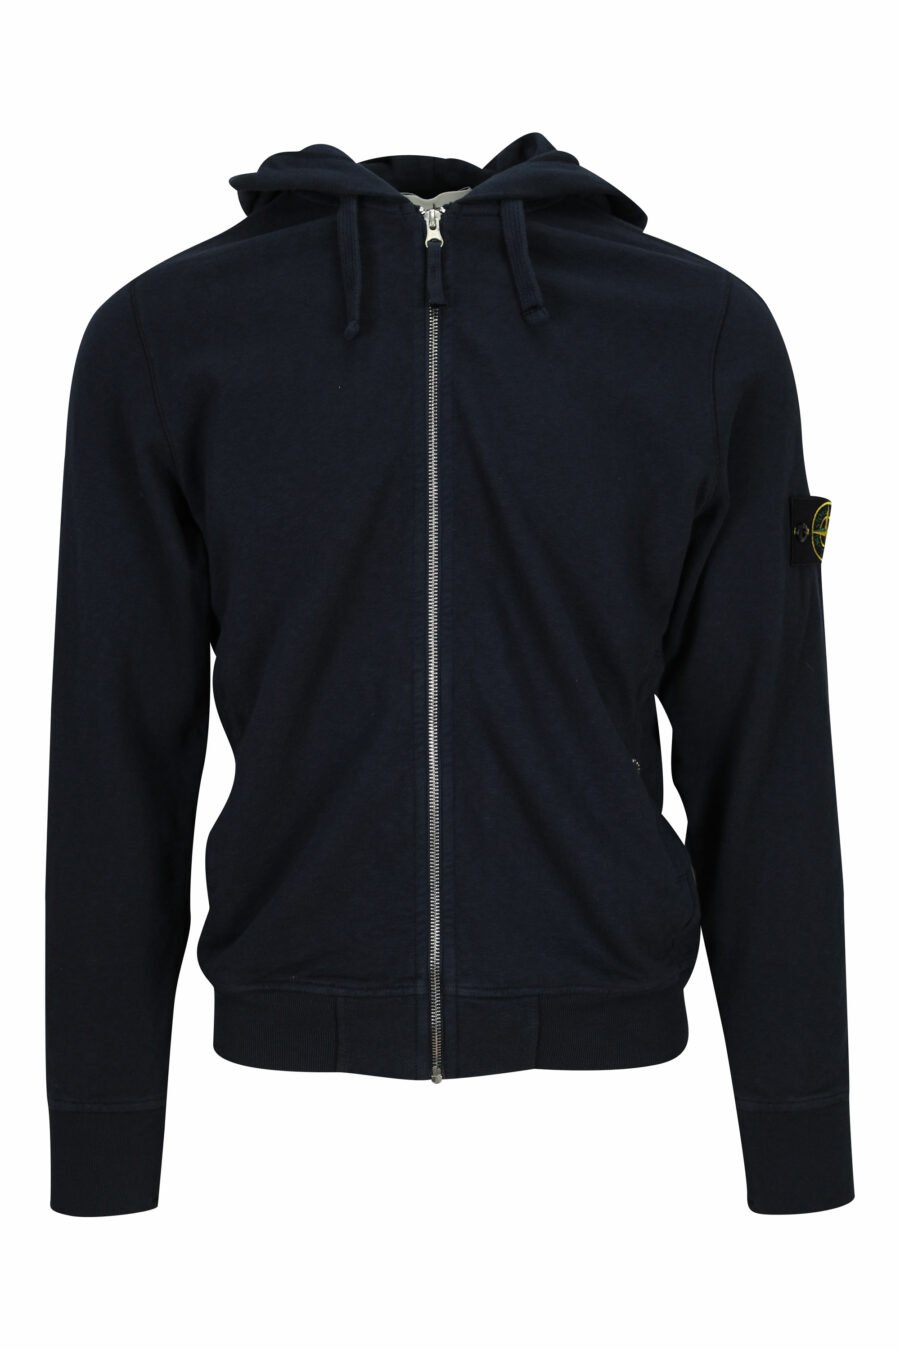 Dark blue hooded zip-up sweatshirt with logo compass patch - 8052572914423